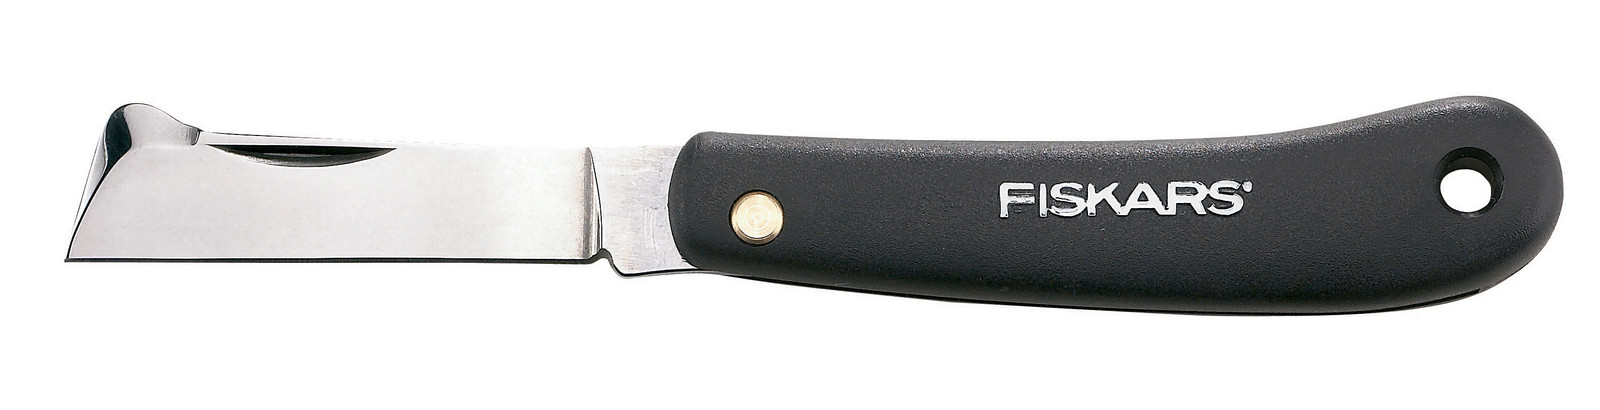 Цена нож складной Fiskars 1001625 в Львове